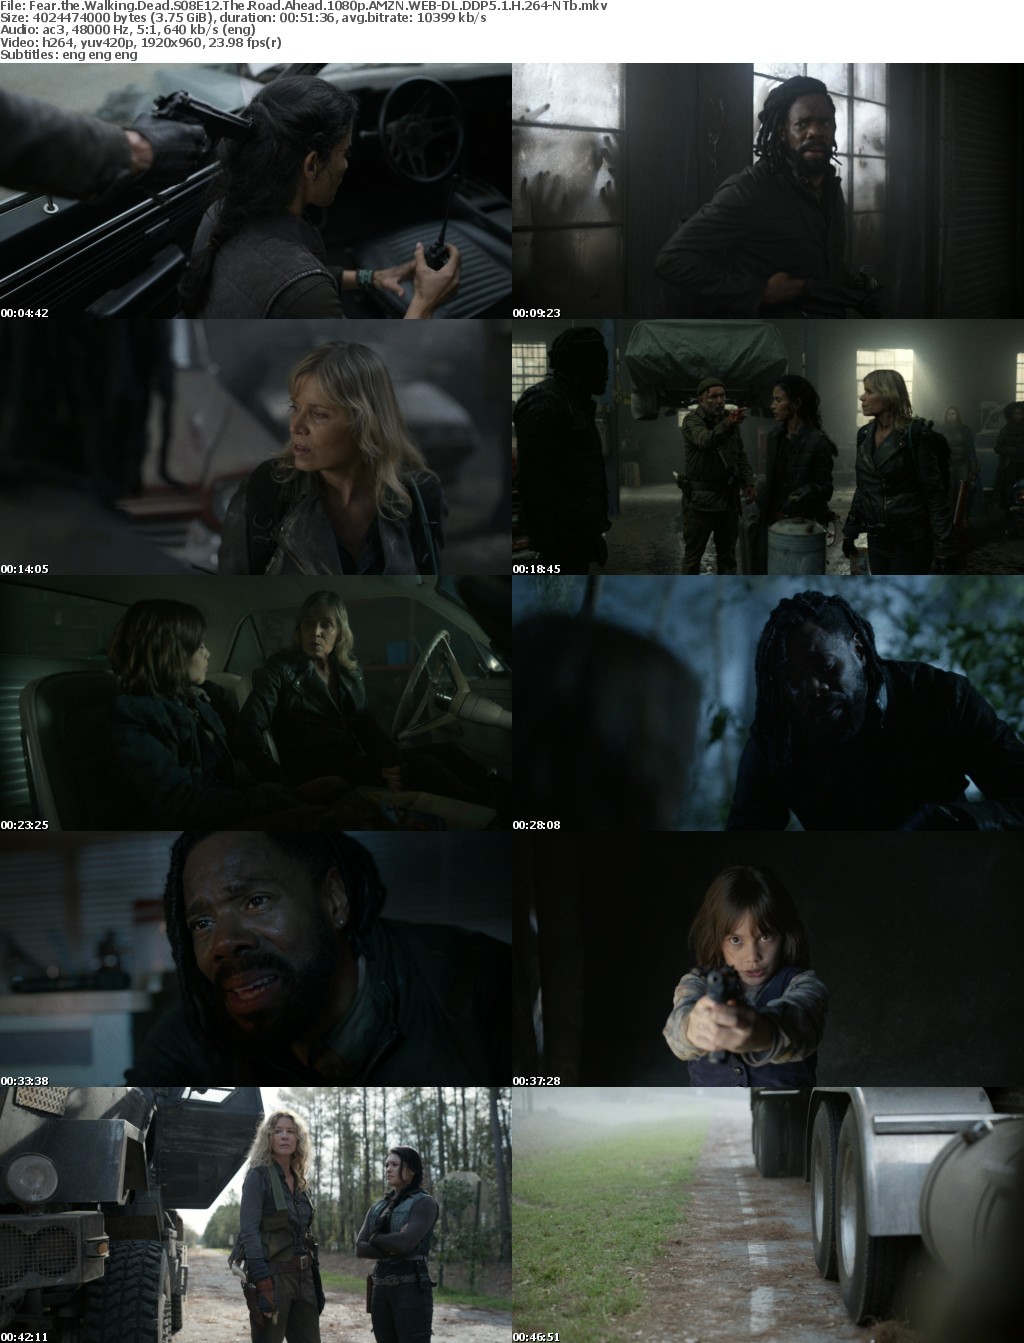 Fear the Walking Dead S08E12 The Road Ahead 1080p AMZN WEB-DL DDP5 1 H 264-NTb